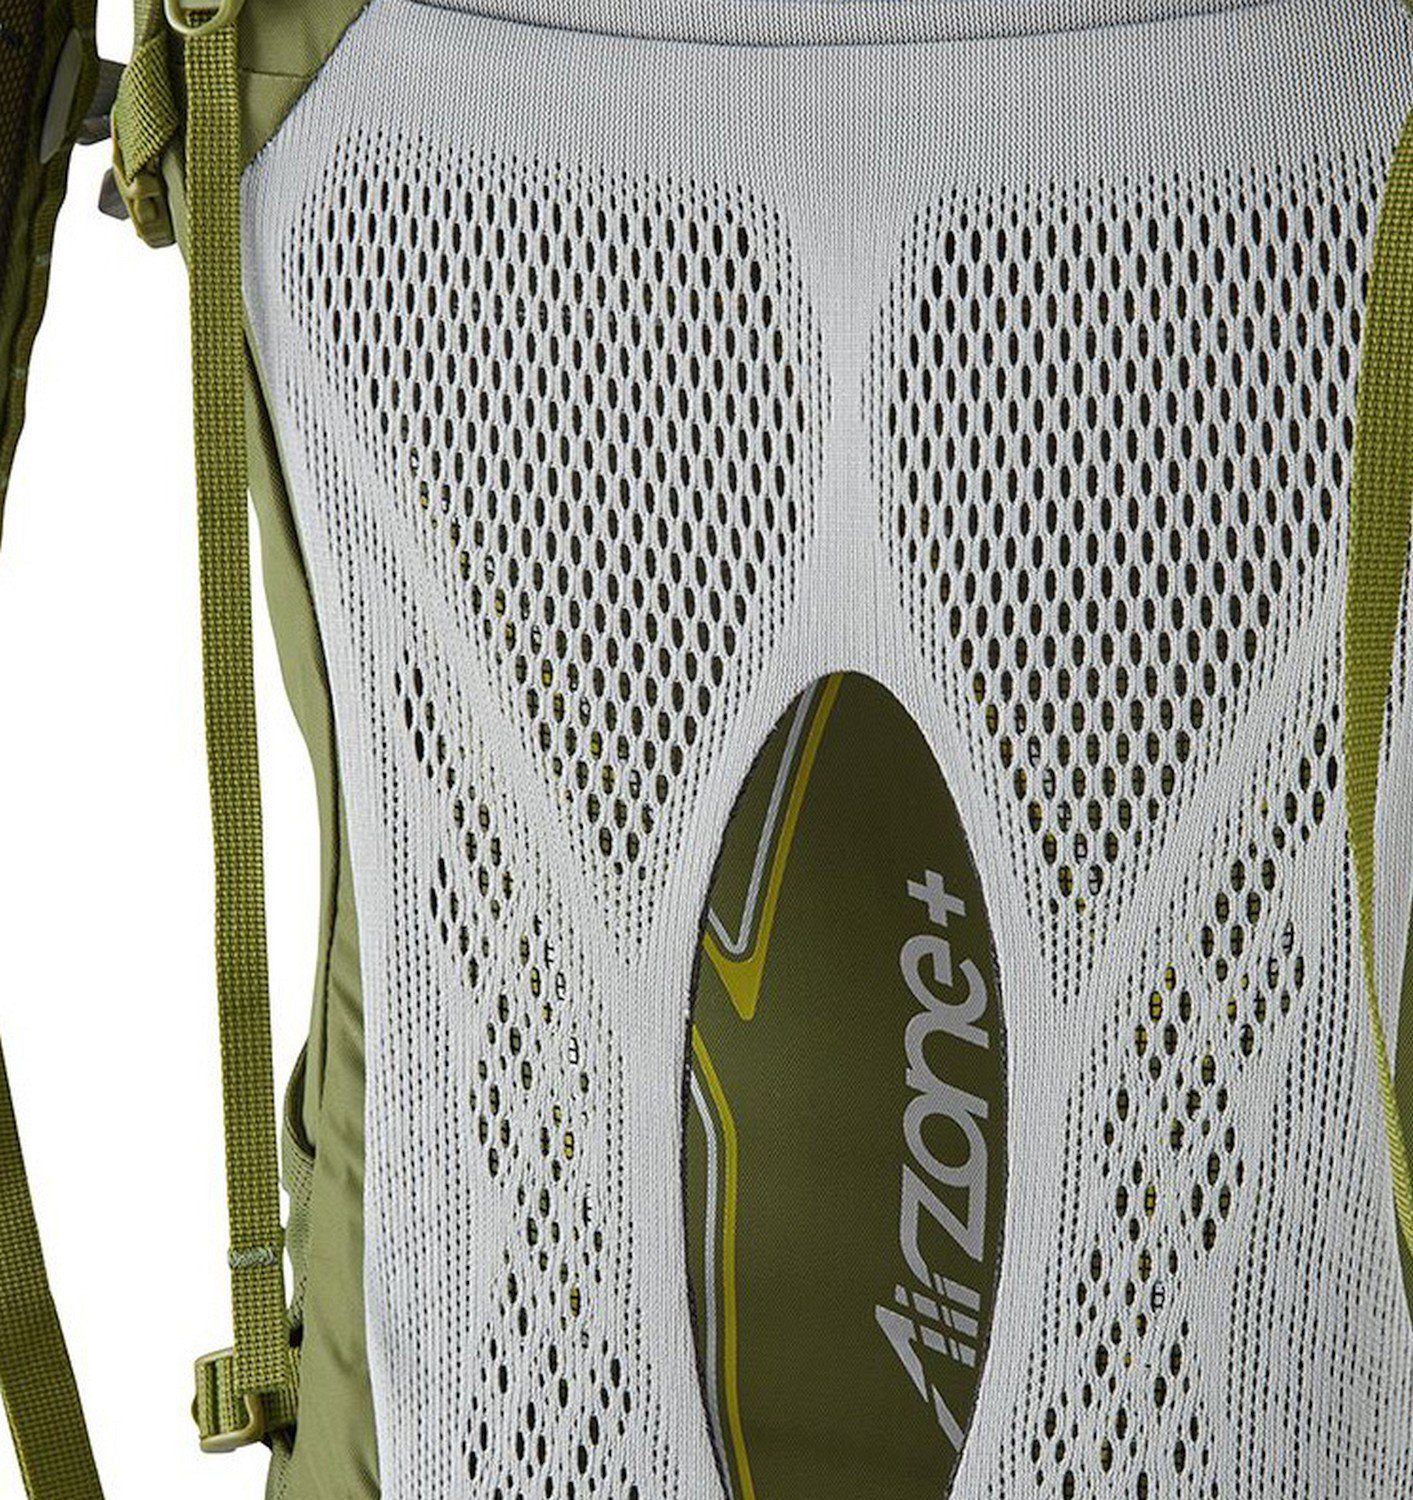 AirZone - 45:55 70 Lowe Alpine fern Trekkingrucksack cm Trekkingrucksack Trek